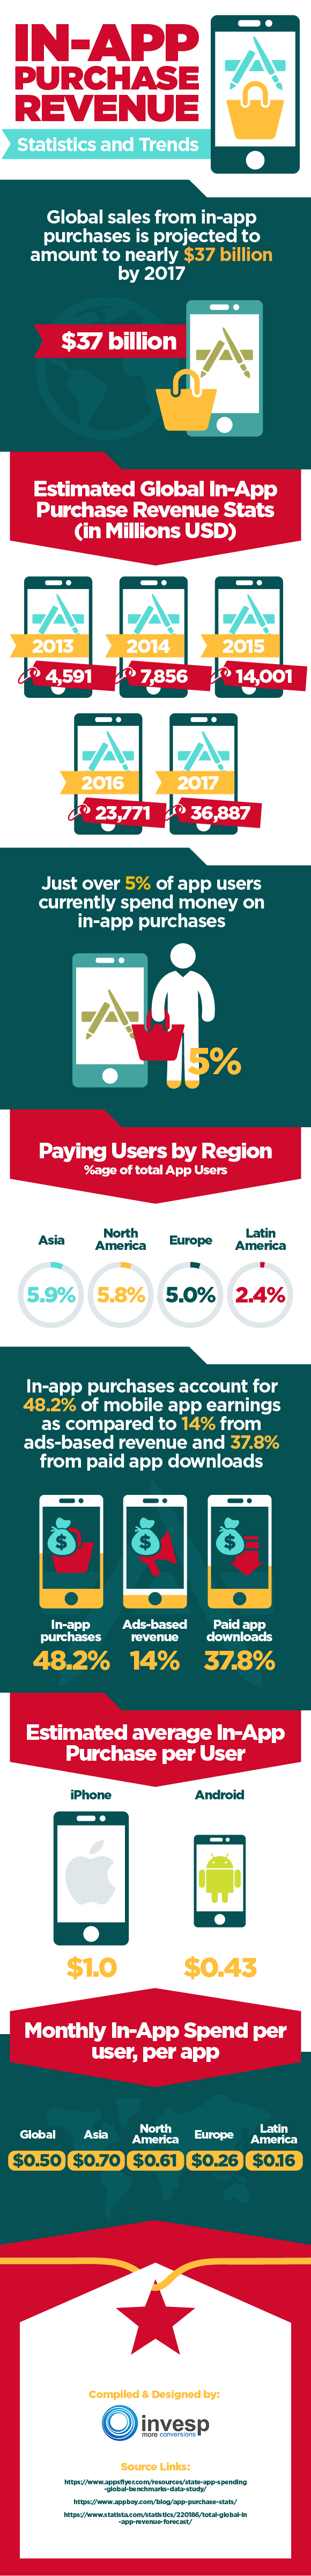 infografia-compras-in-app